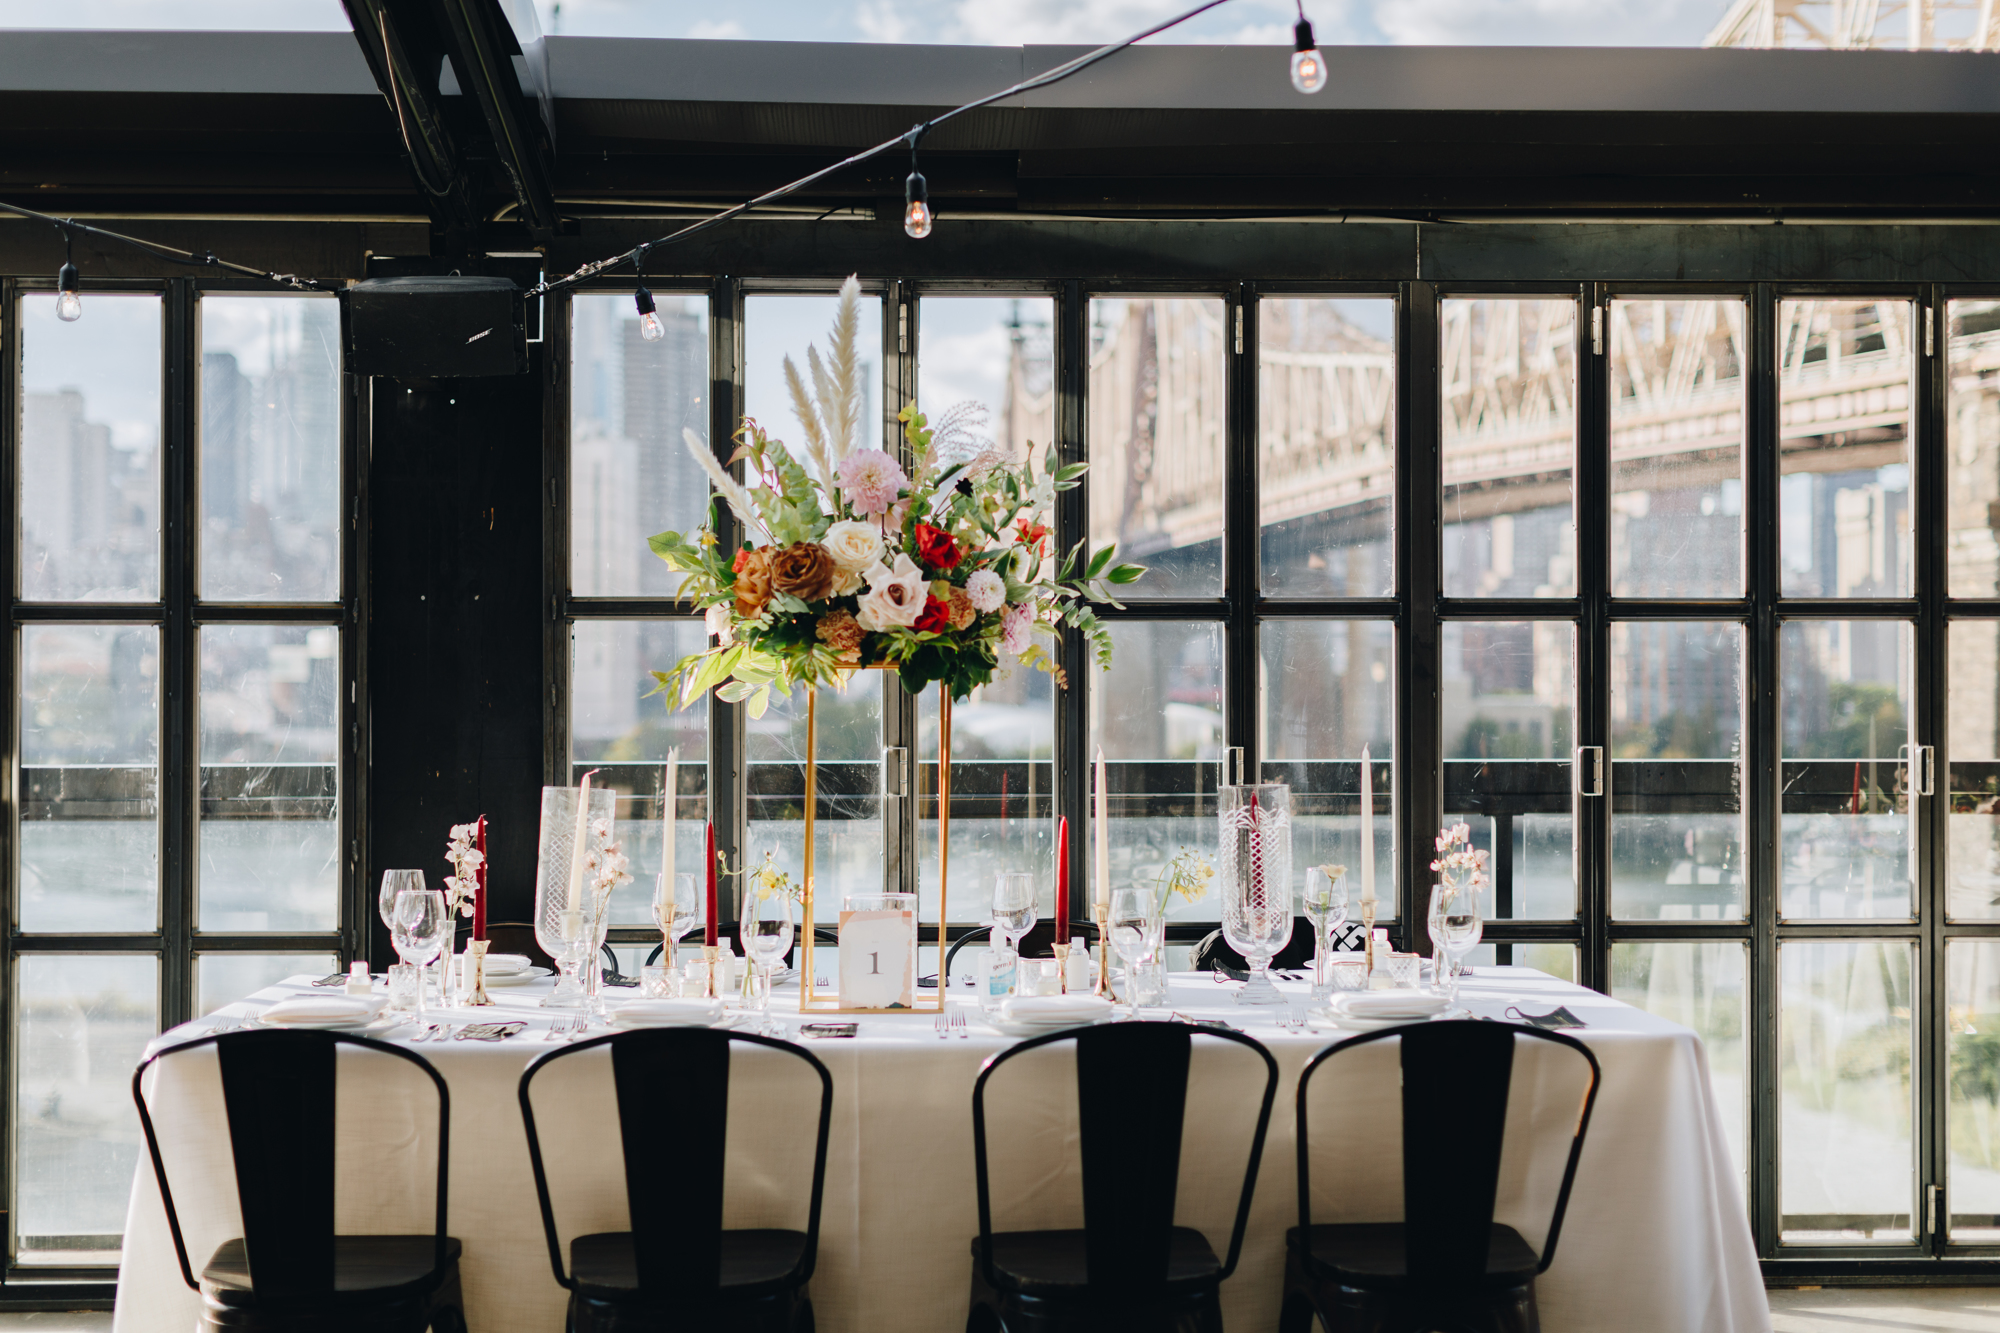 Ravel Hotel wedding reception decor ideas